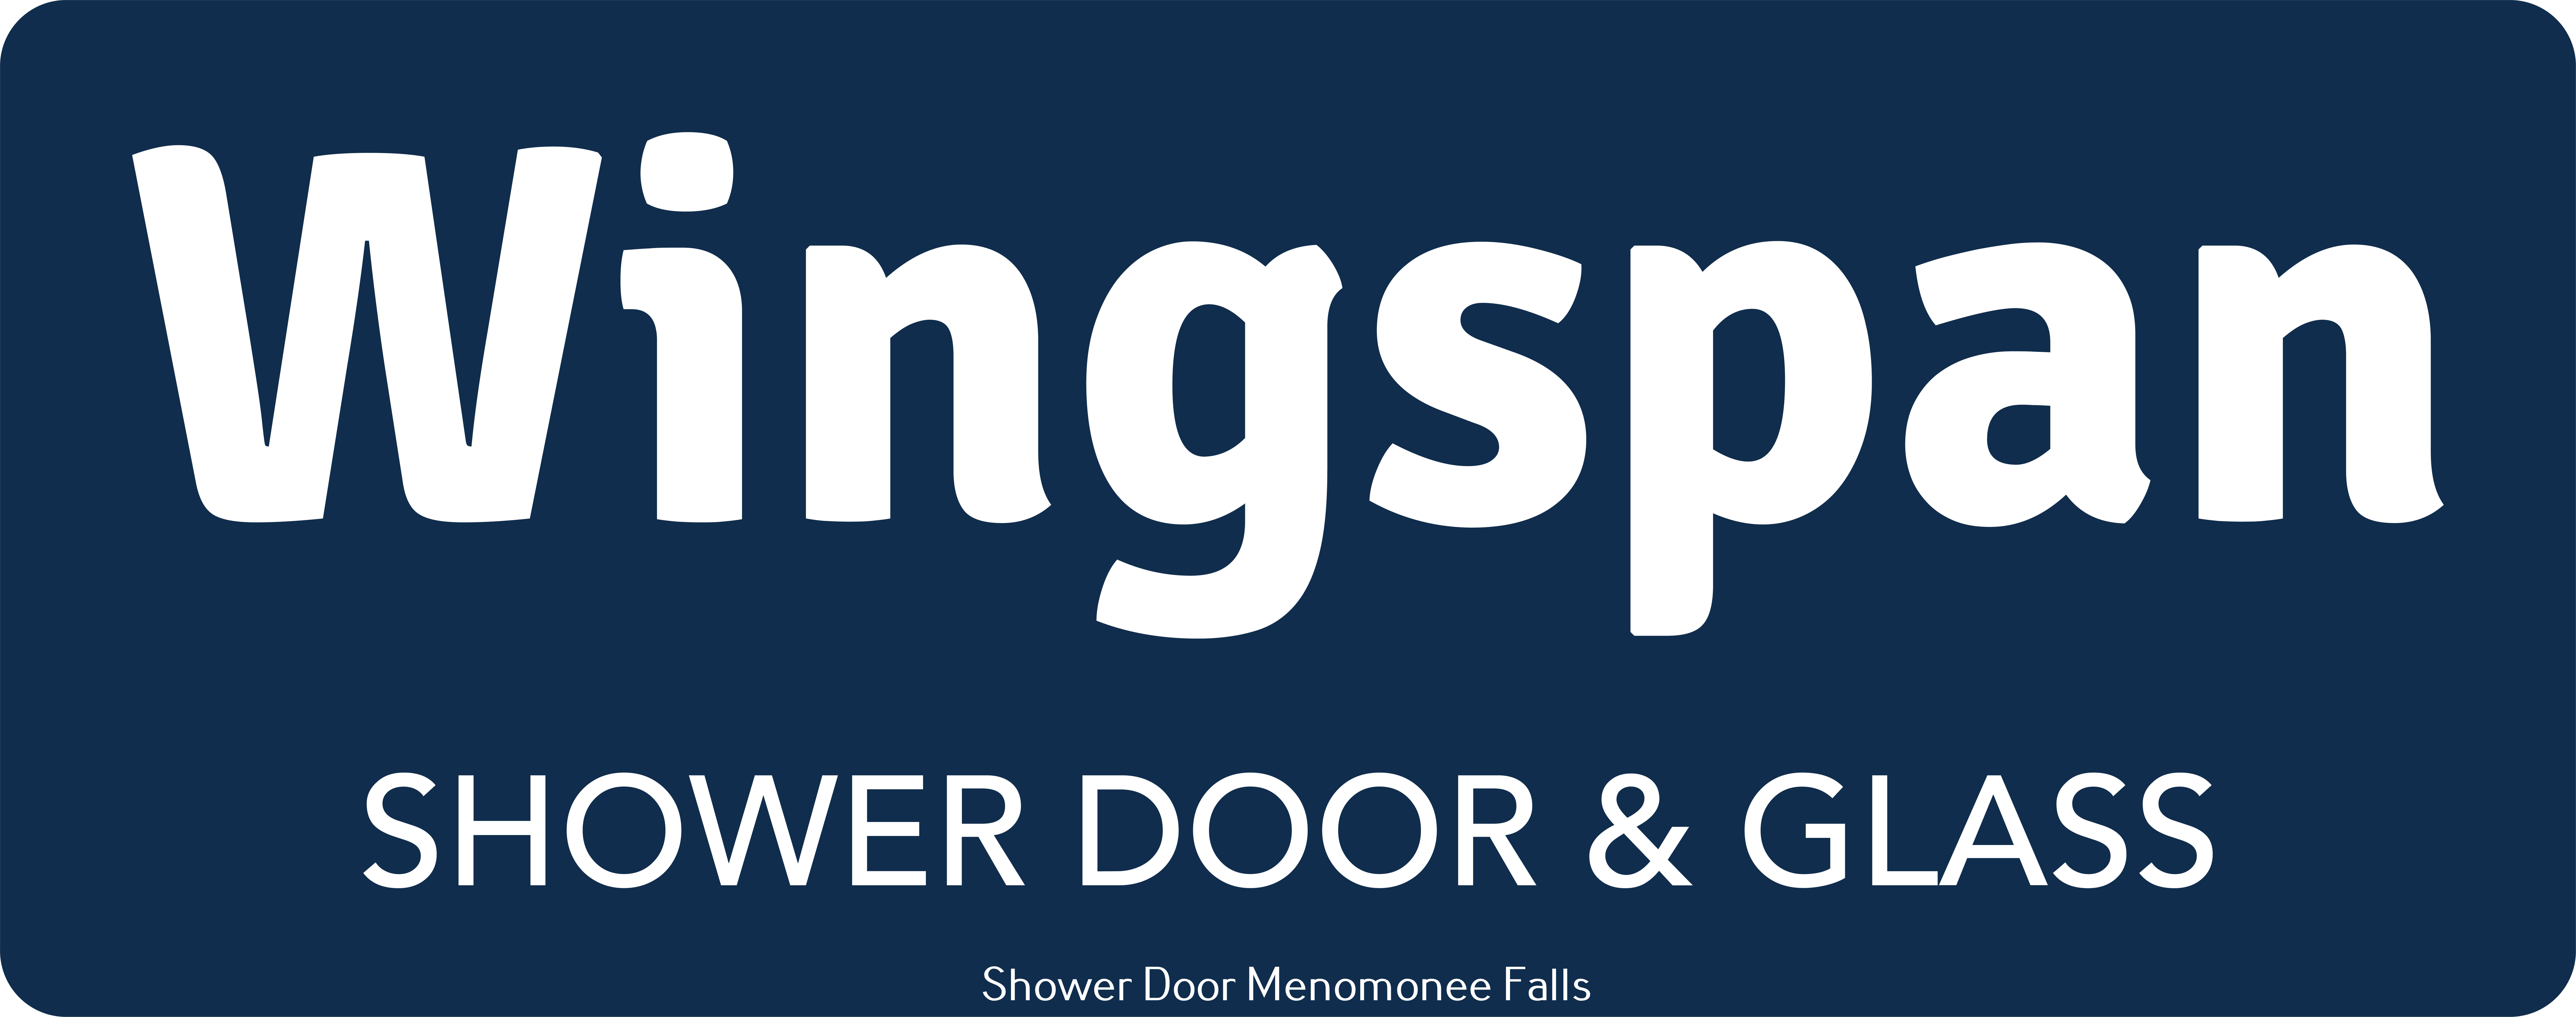 Wingspan Shower Door & Glass Outlines Safety Features of Modern Frameless Shower Doors